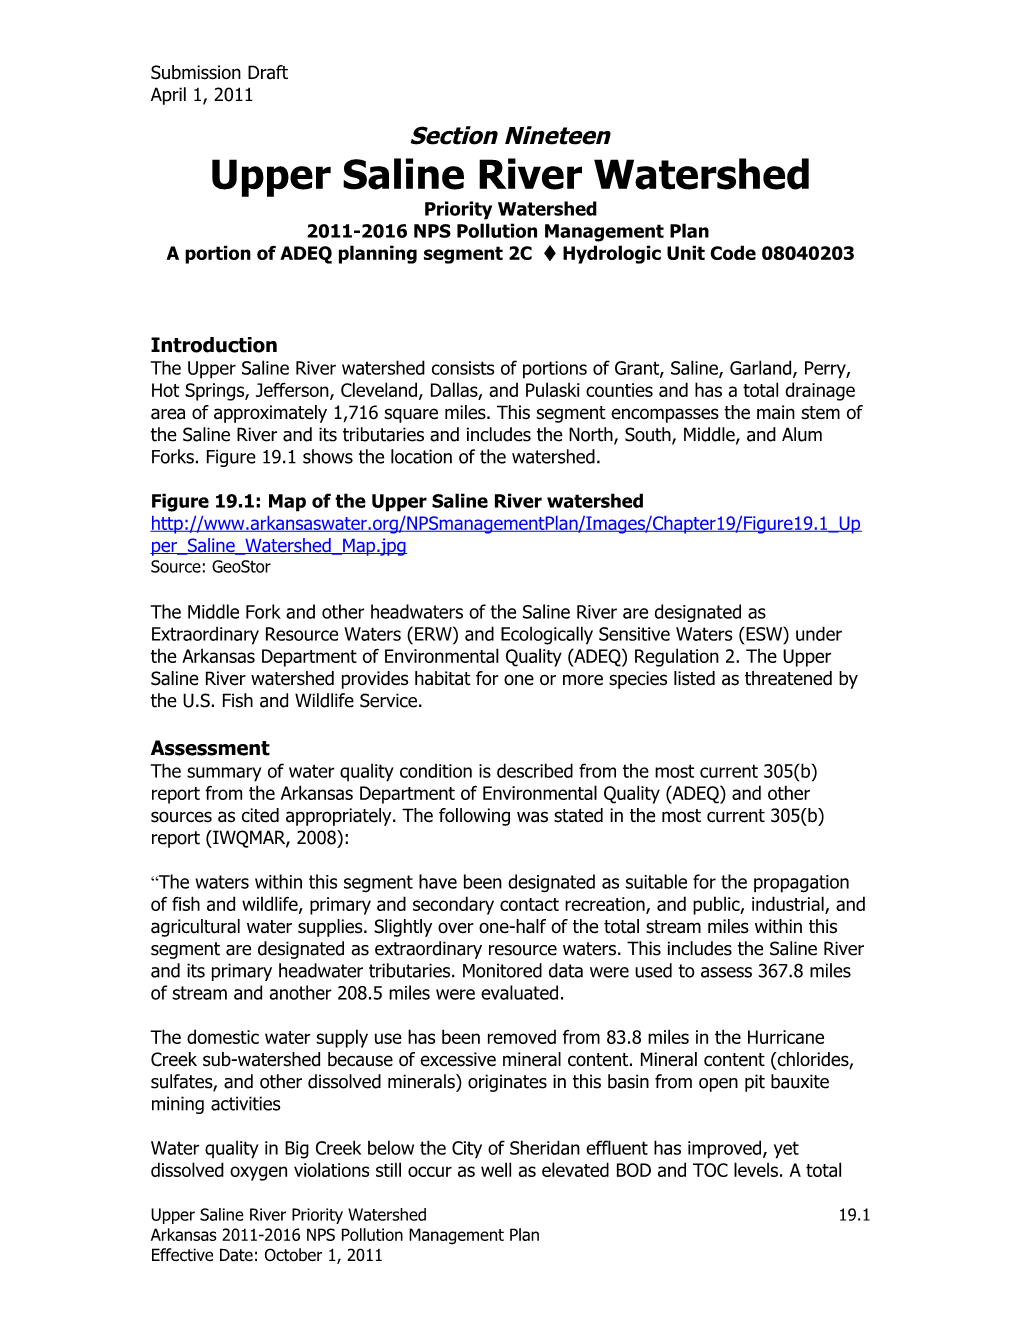 Upper Saline River Reservoir